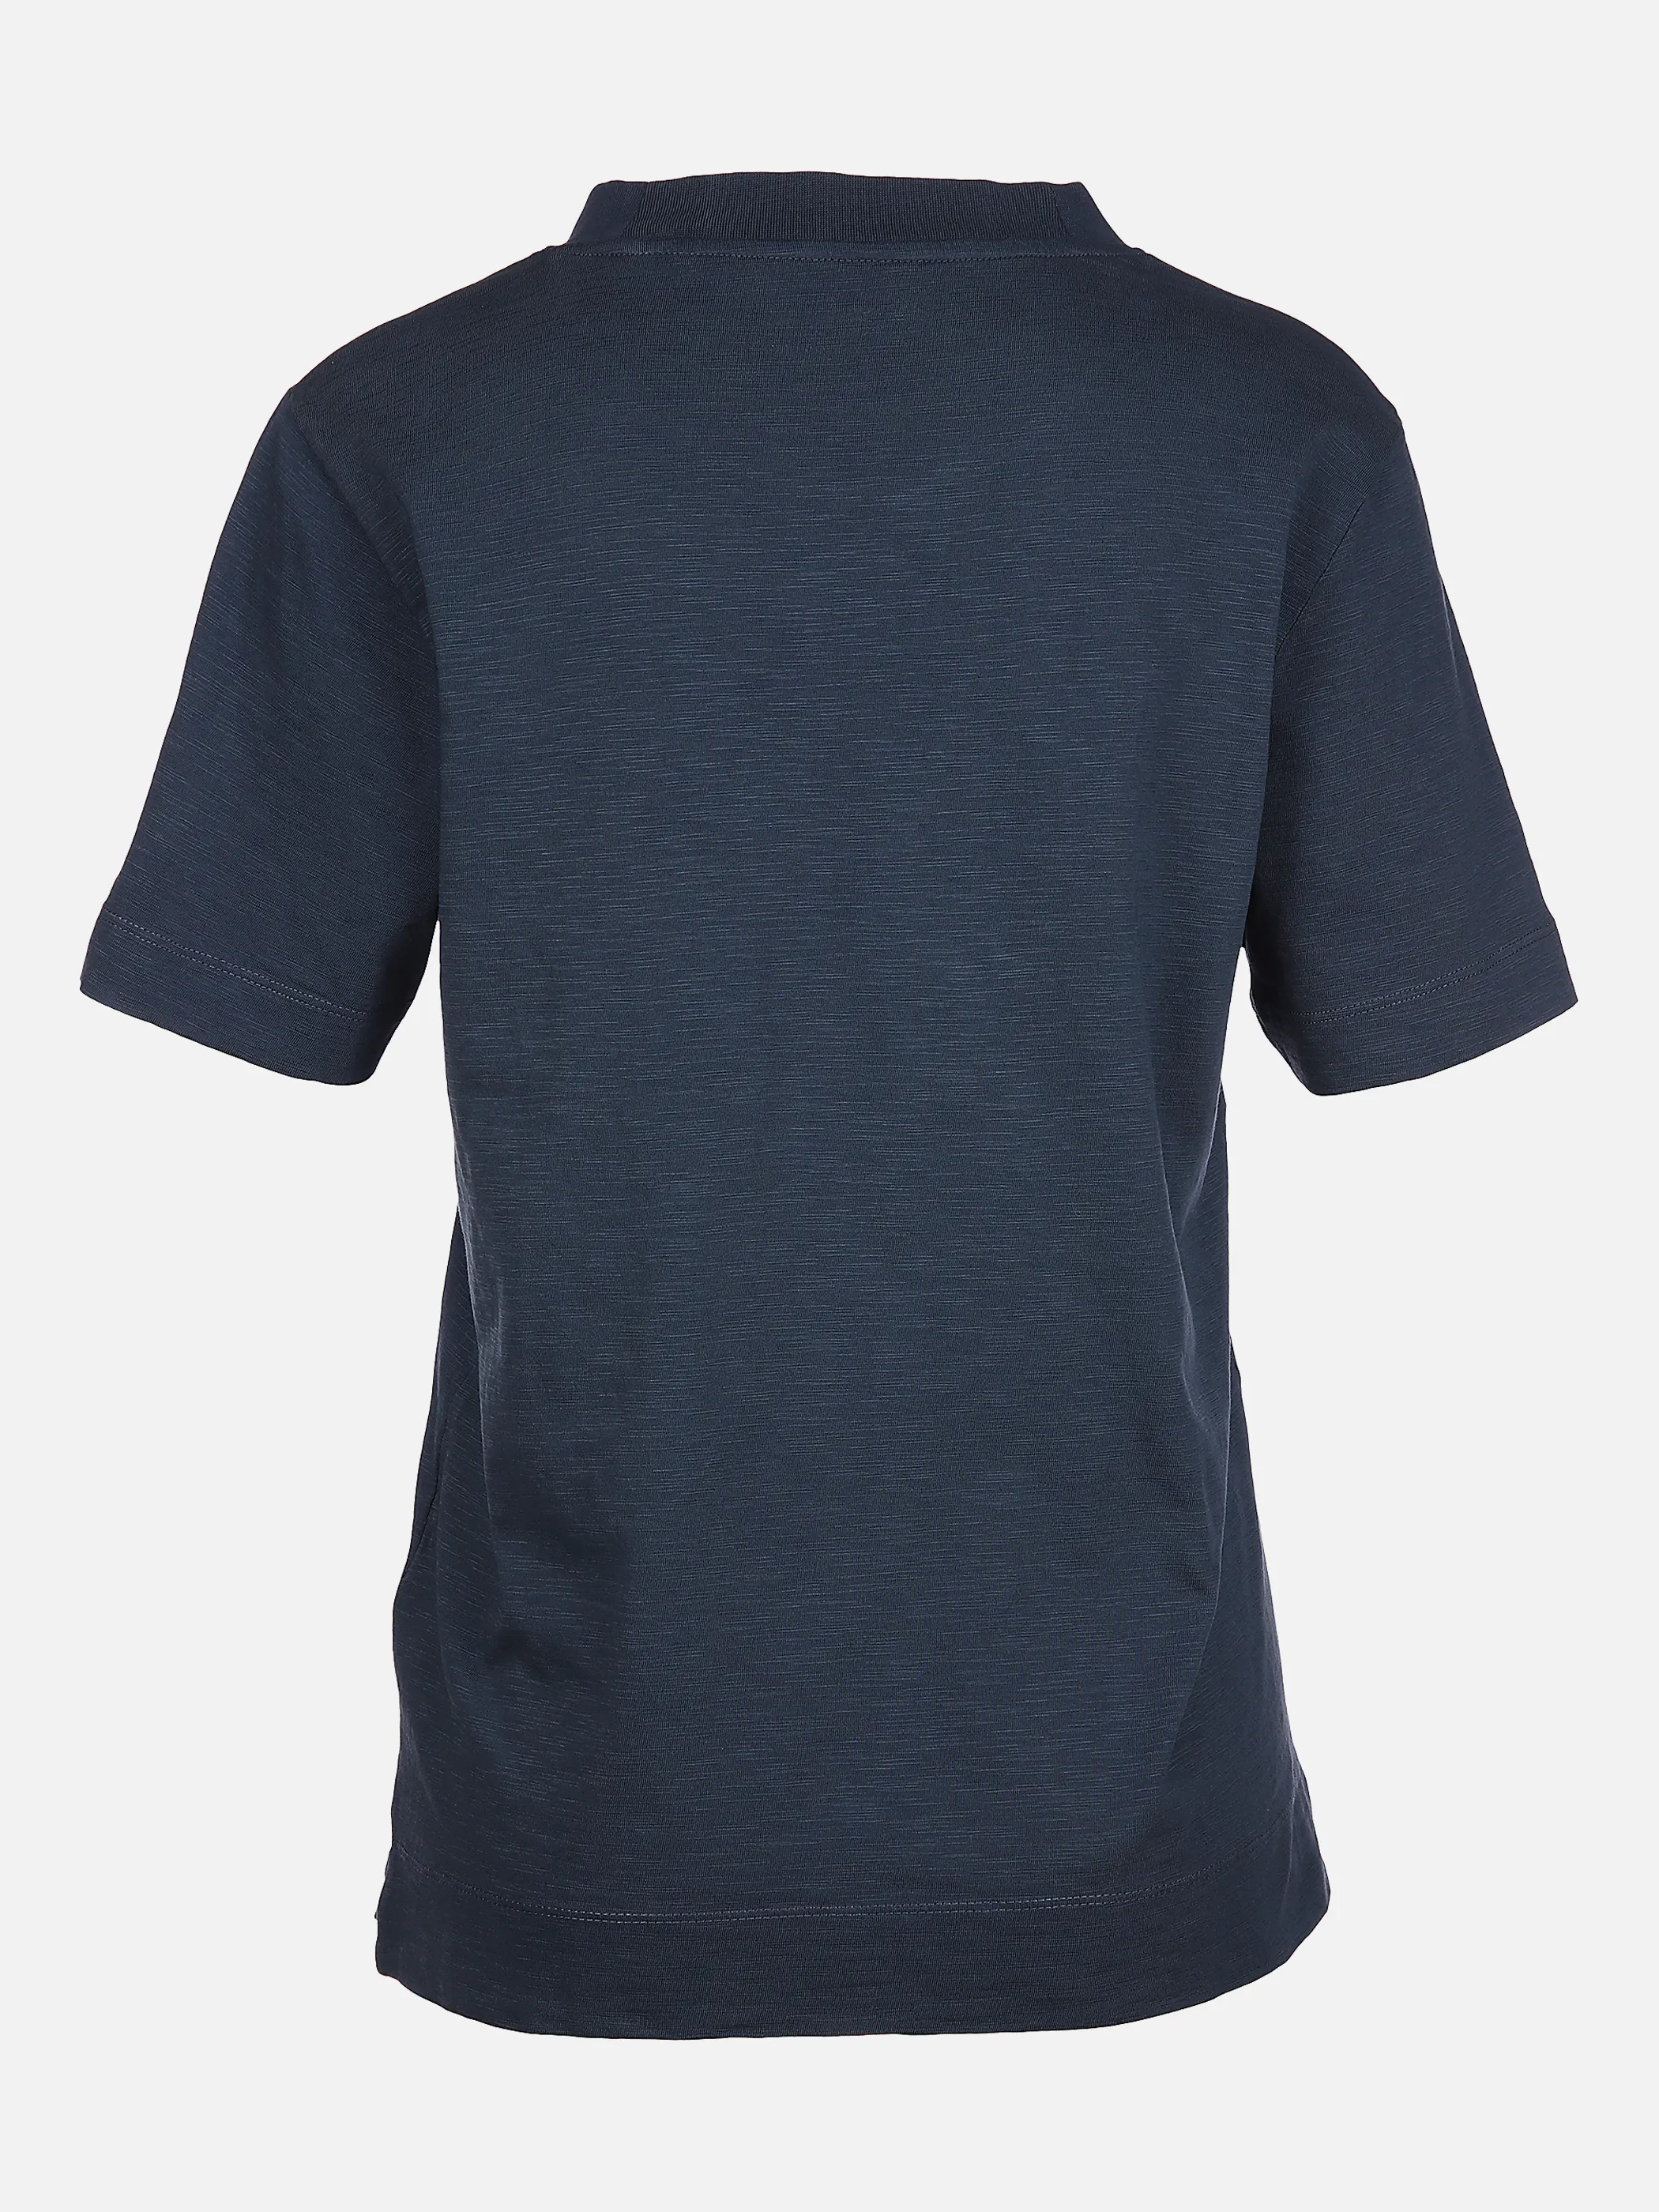 Tom Tailor 1031213 t-shirt natural dye Blau 865218 11758 2